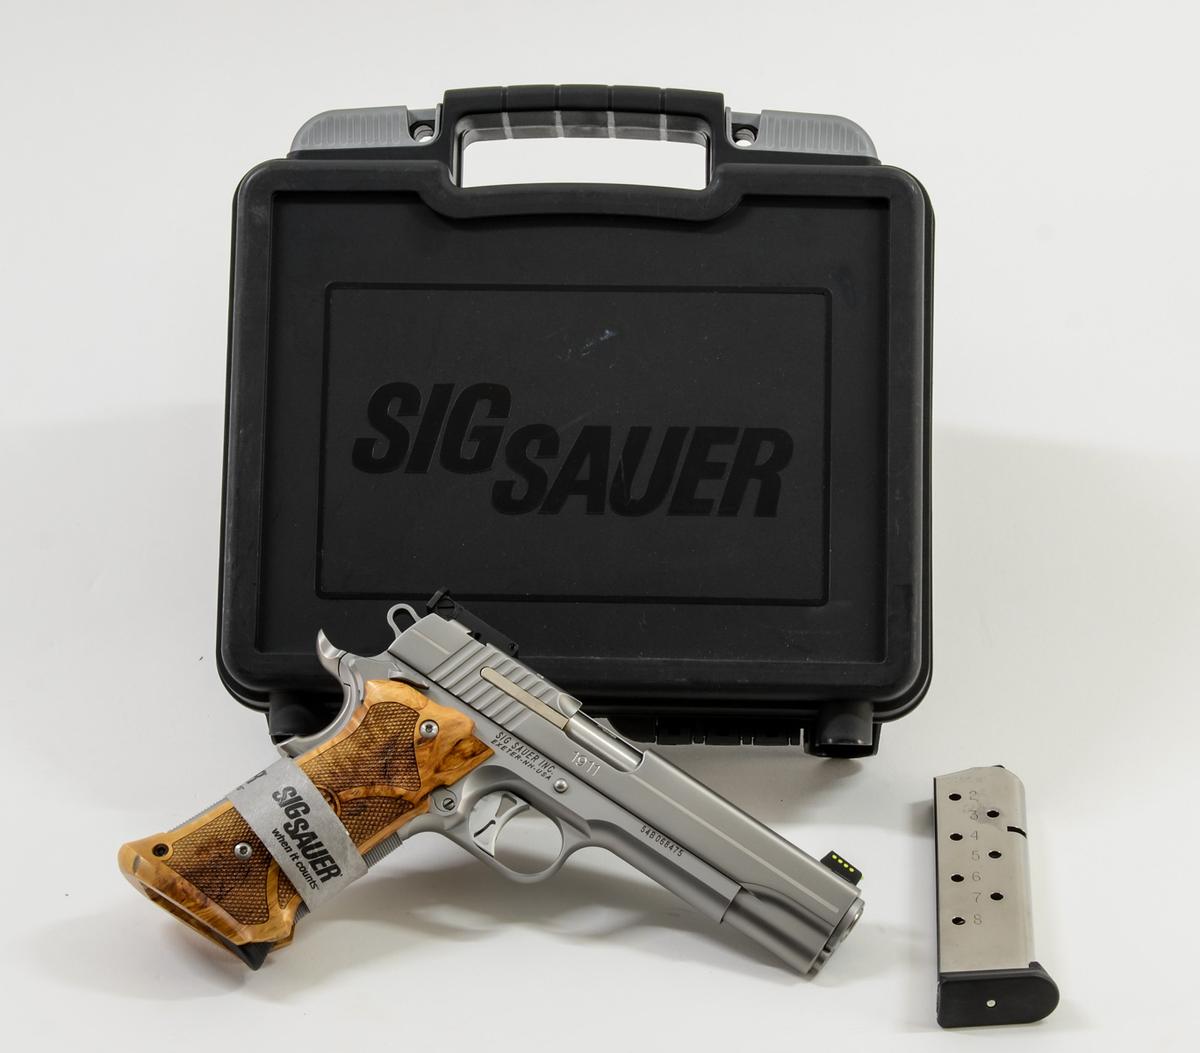 Sig Sauer 1911 Super Target Pistol